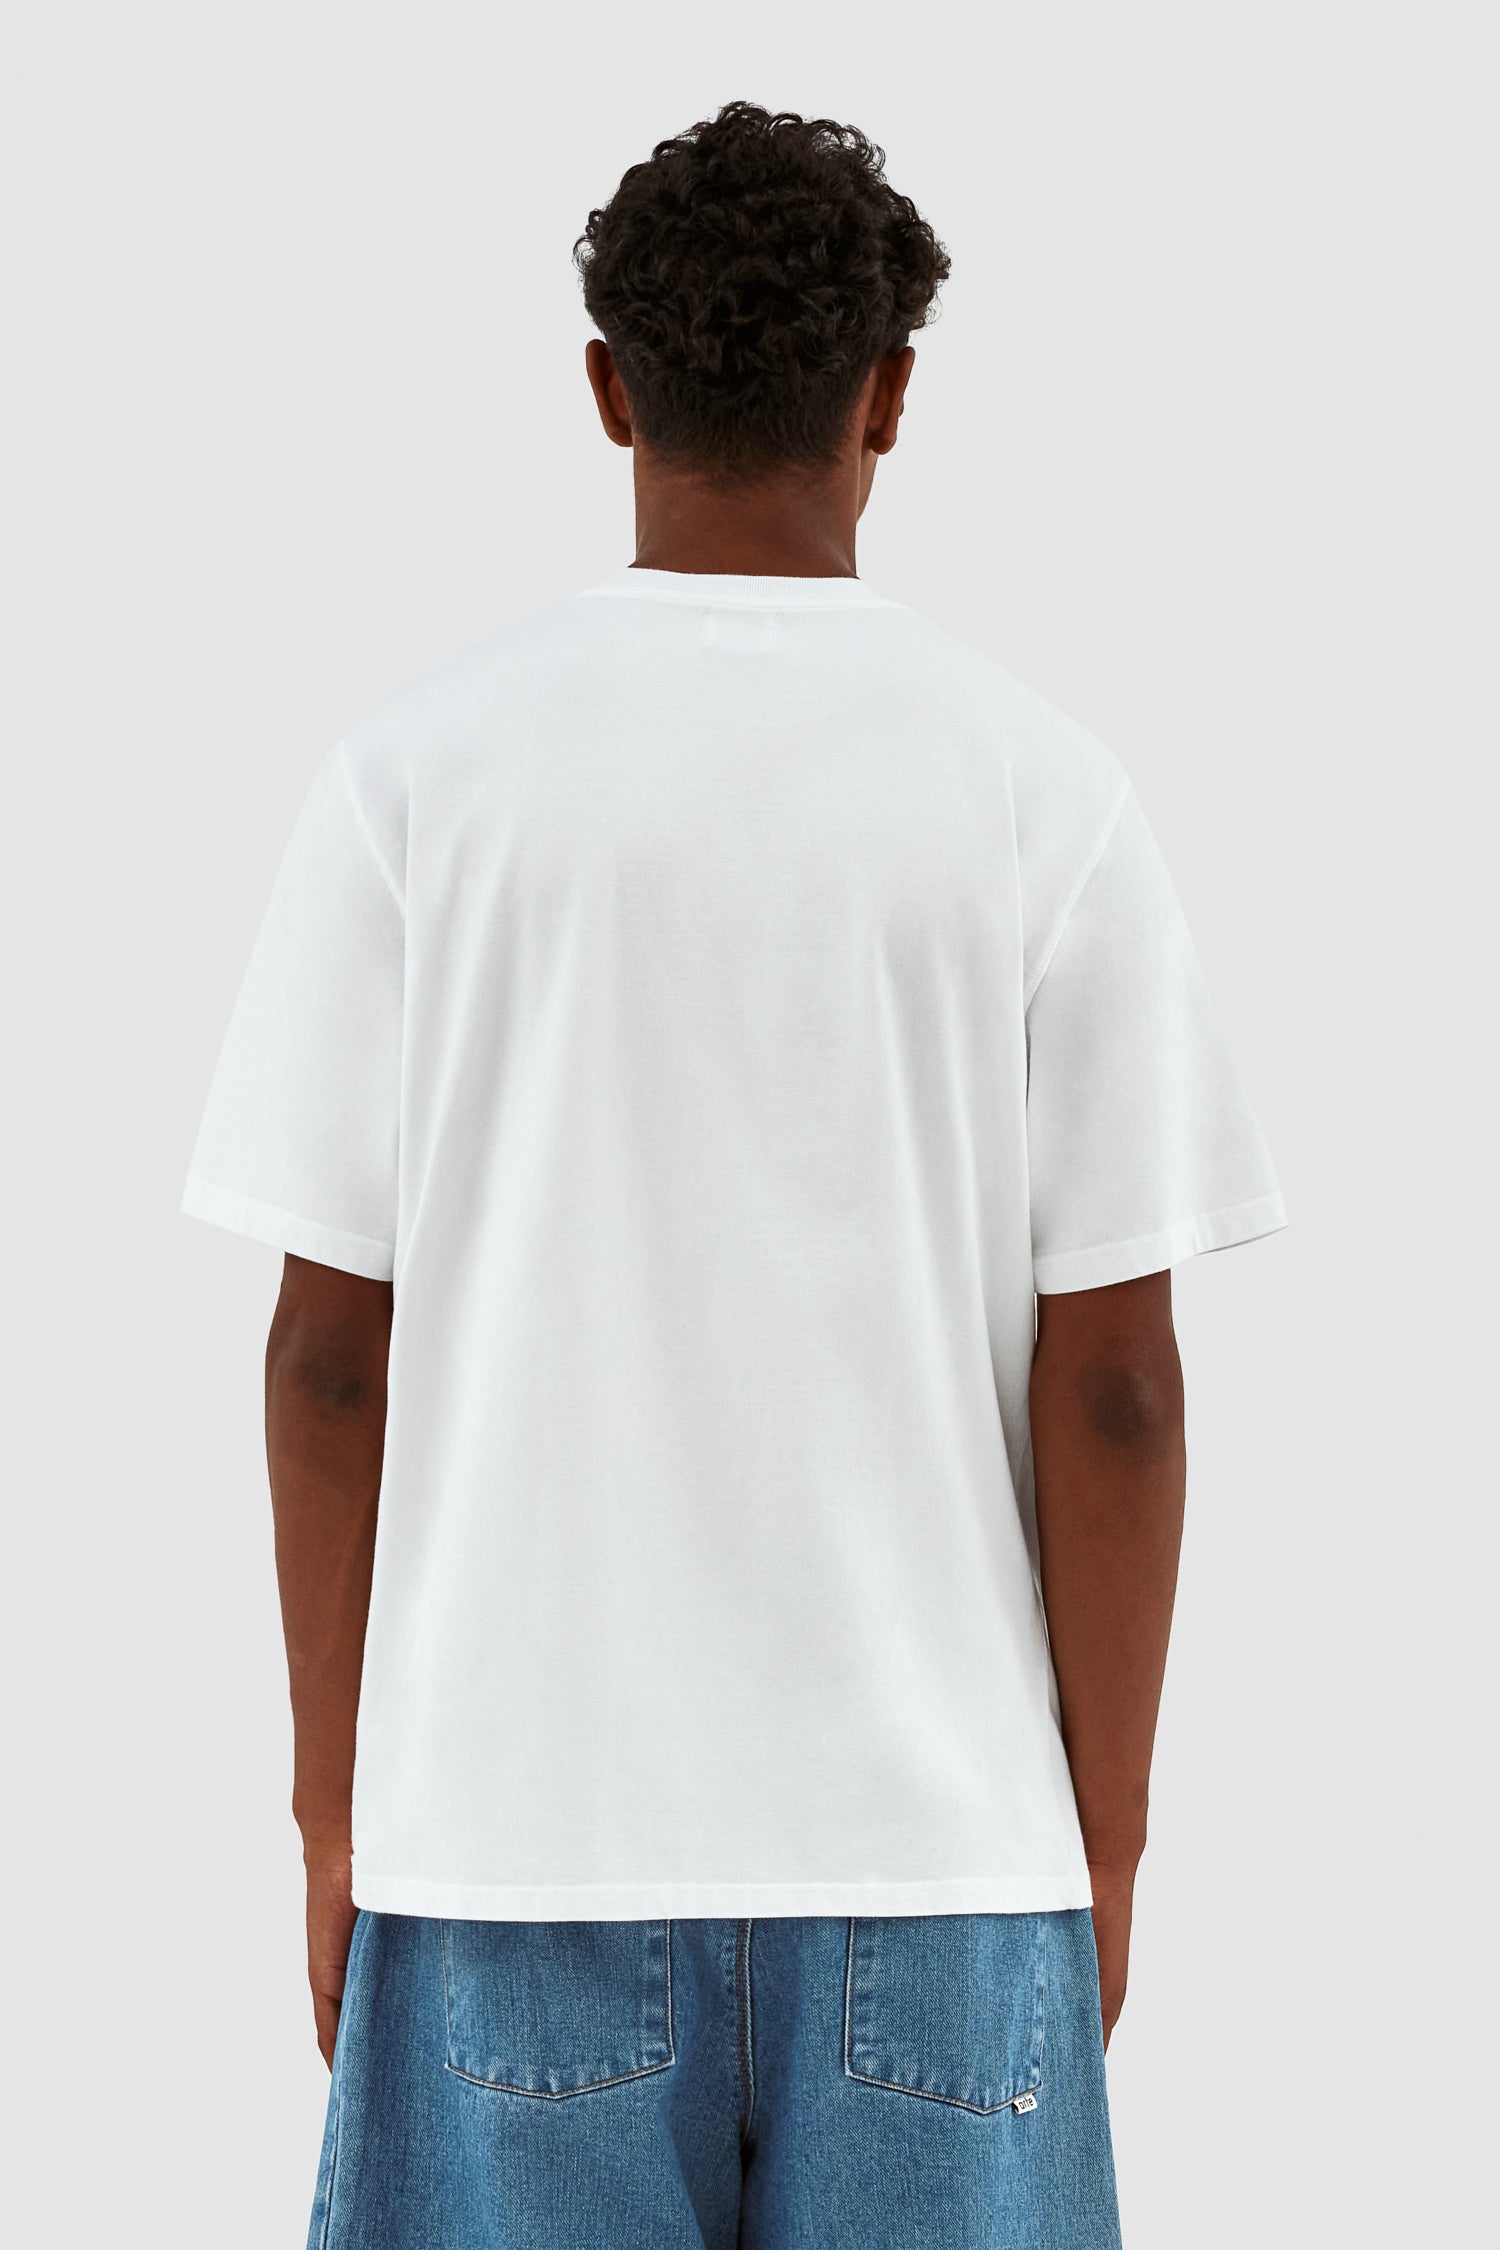 Teo Arte Front T-shirt - White